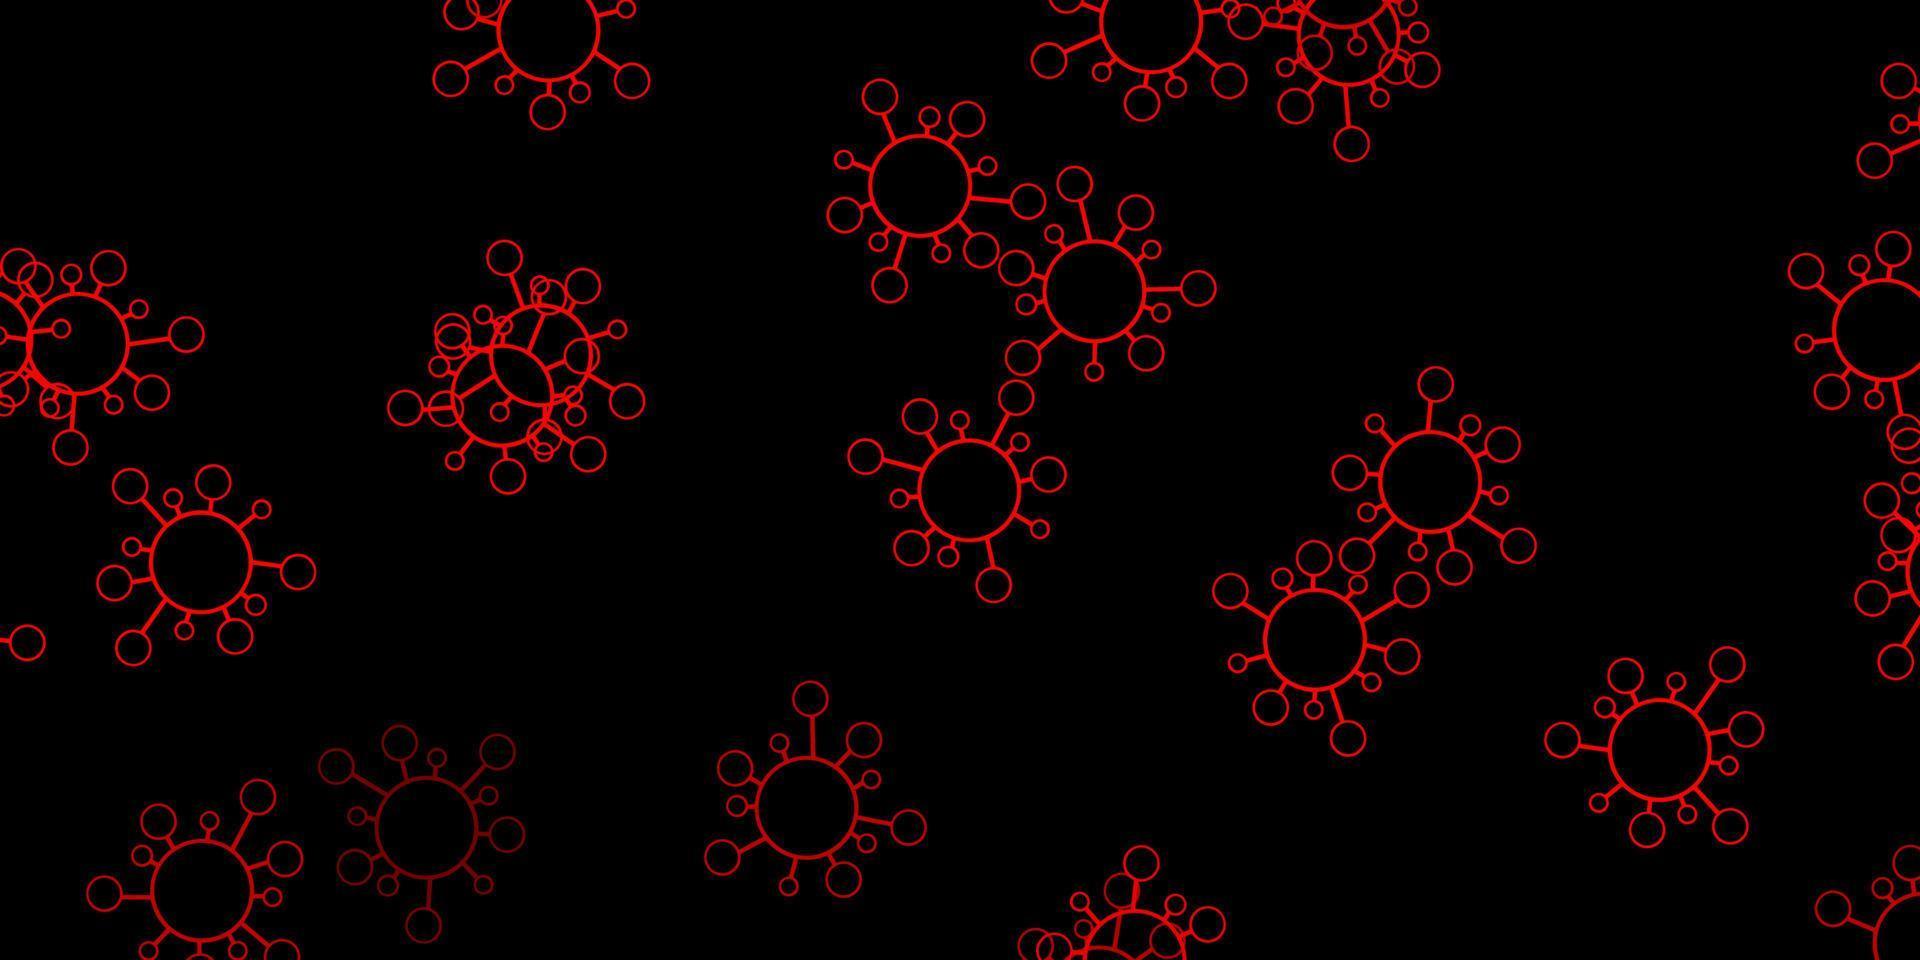 Dark red, yellow vector backdrop with virus symbols.